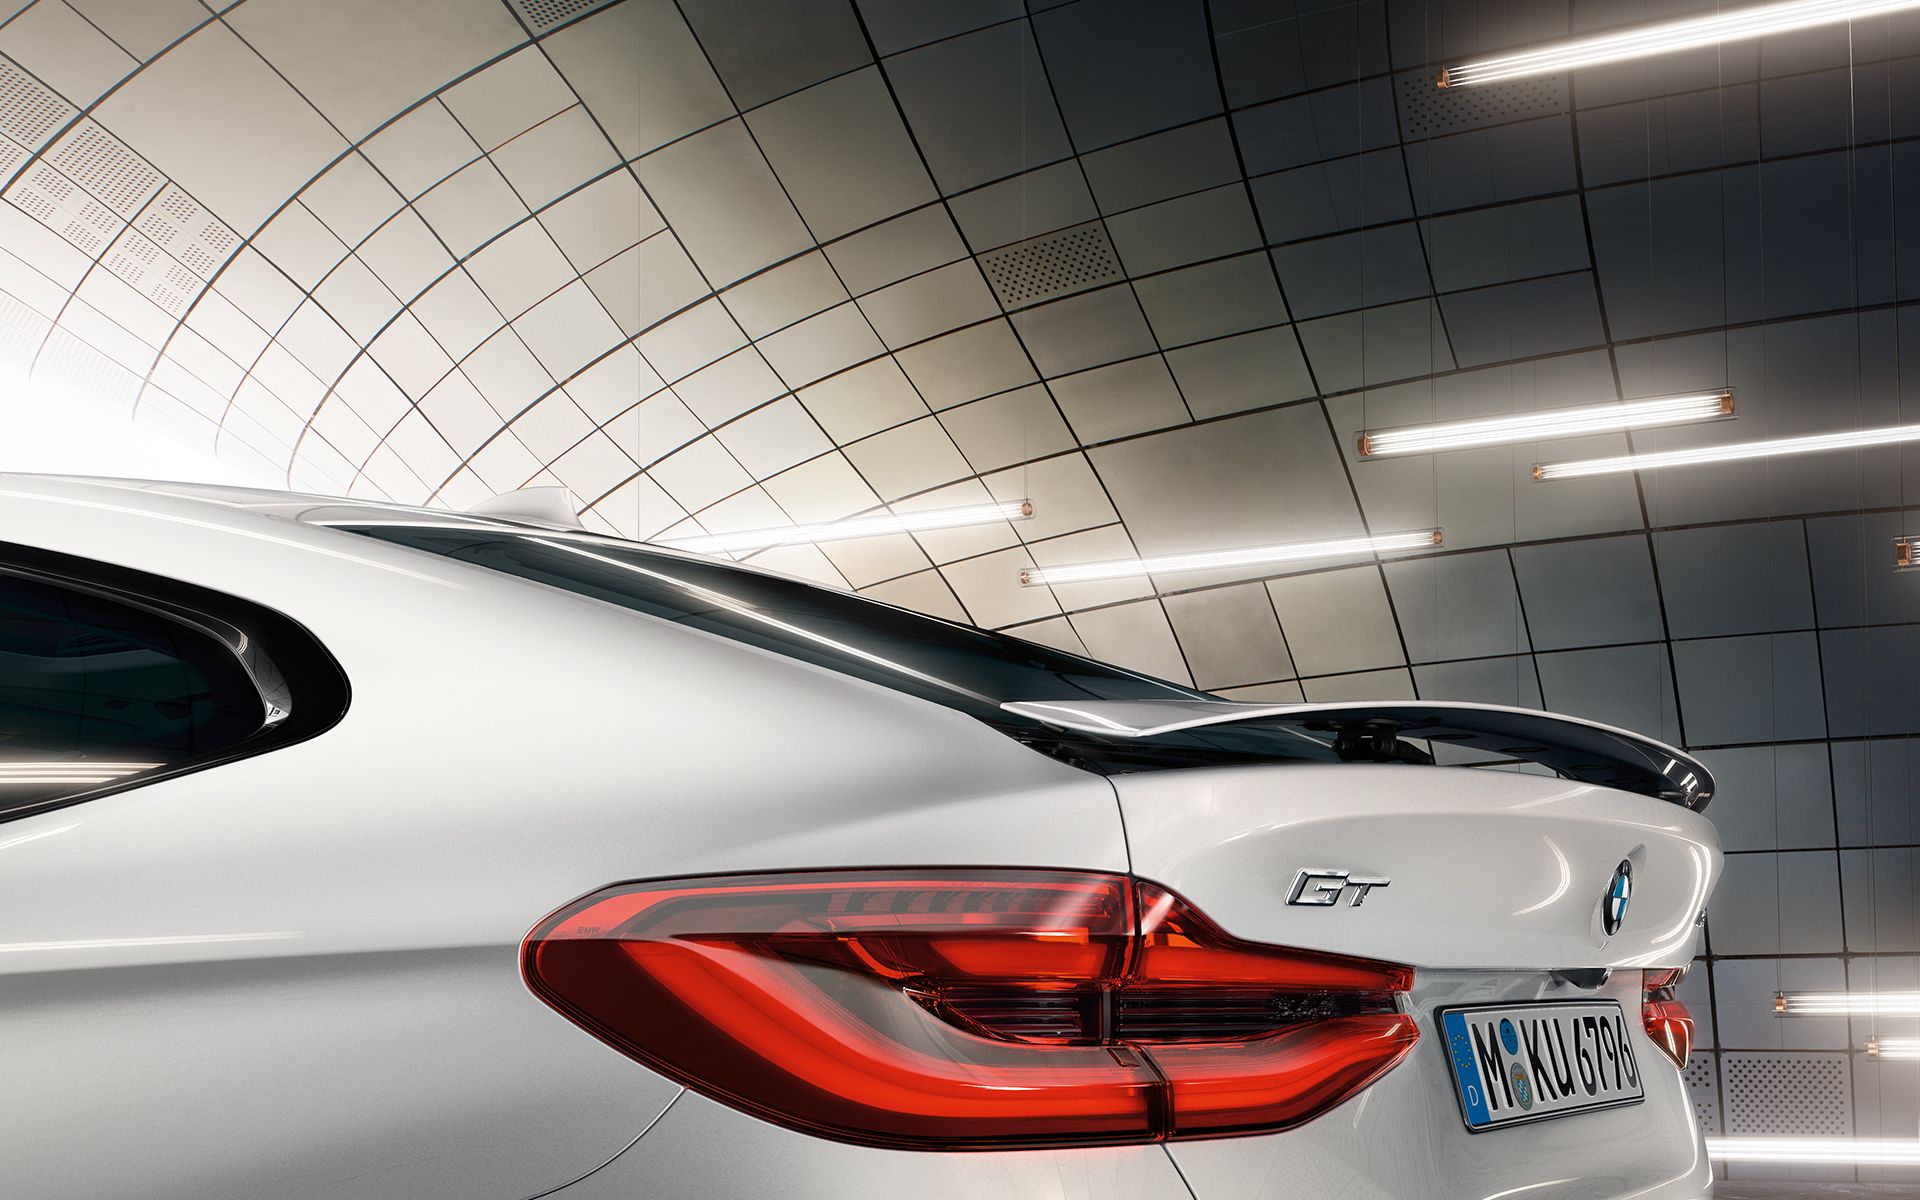 BMW 6 Series Gran Turismo: Image & Videos